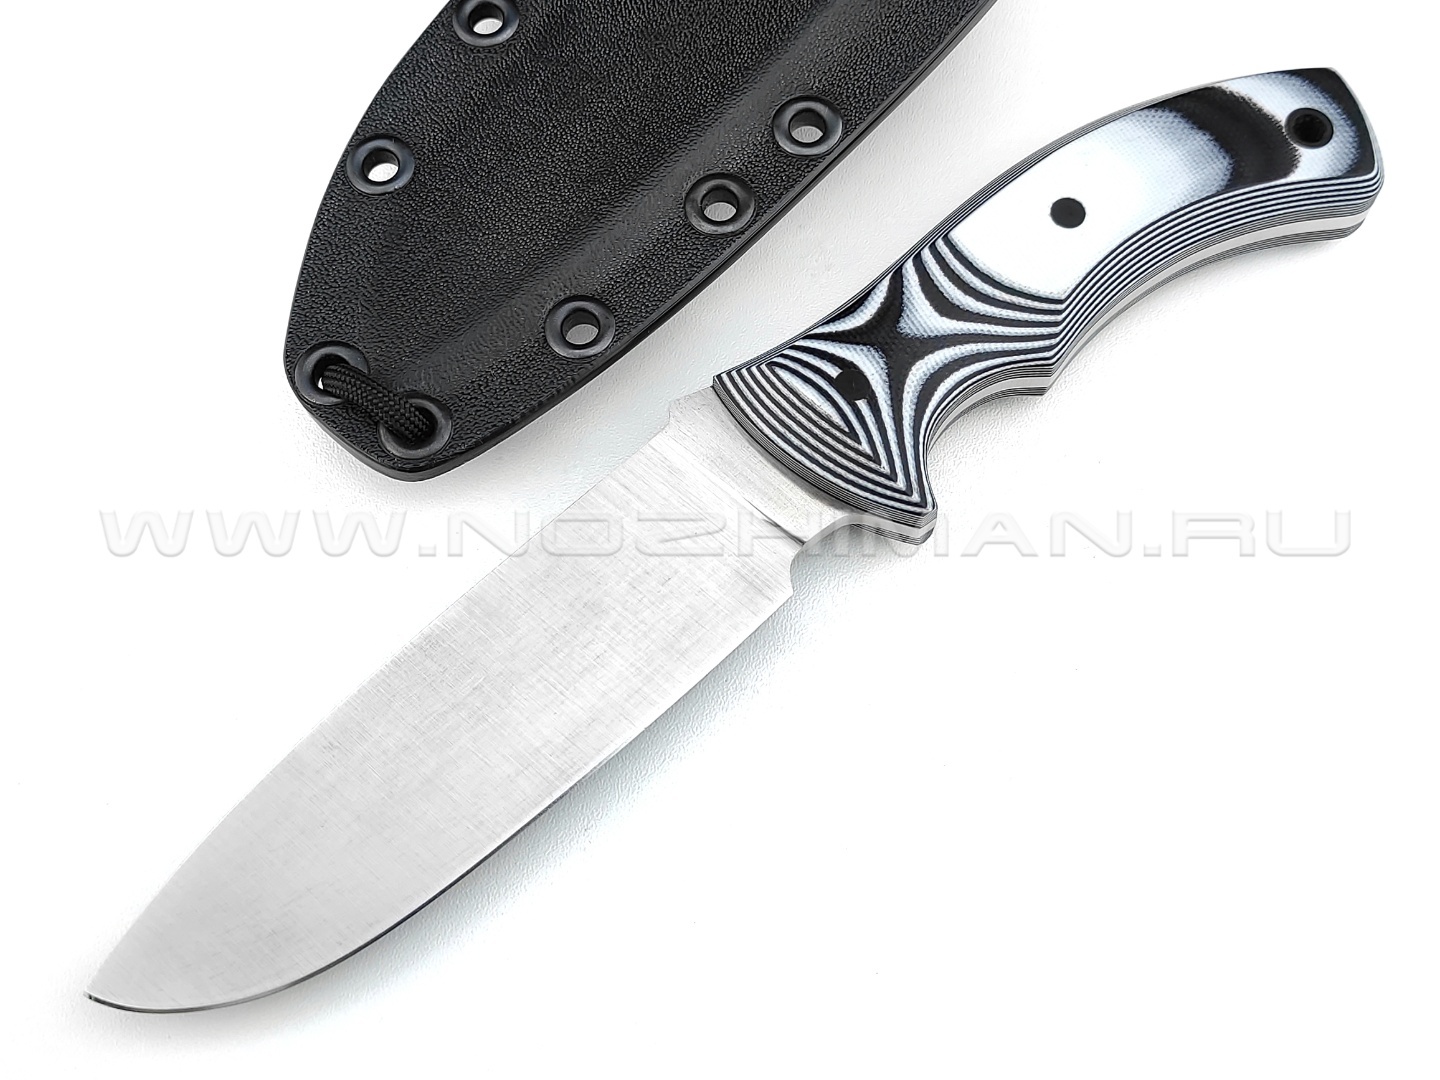 Волчий Век нож "Команданте" Light Edition сталь Niolox WA, рукоять G10 black & white